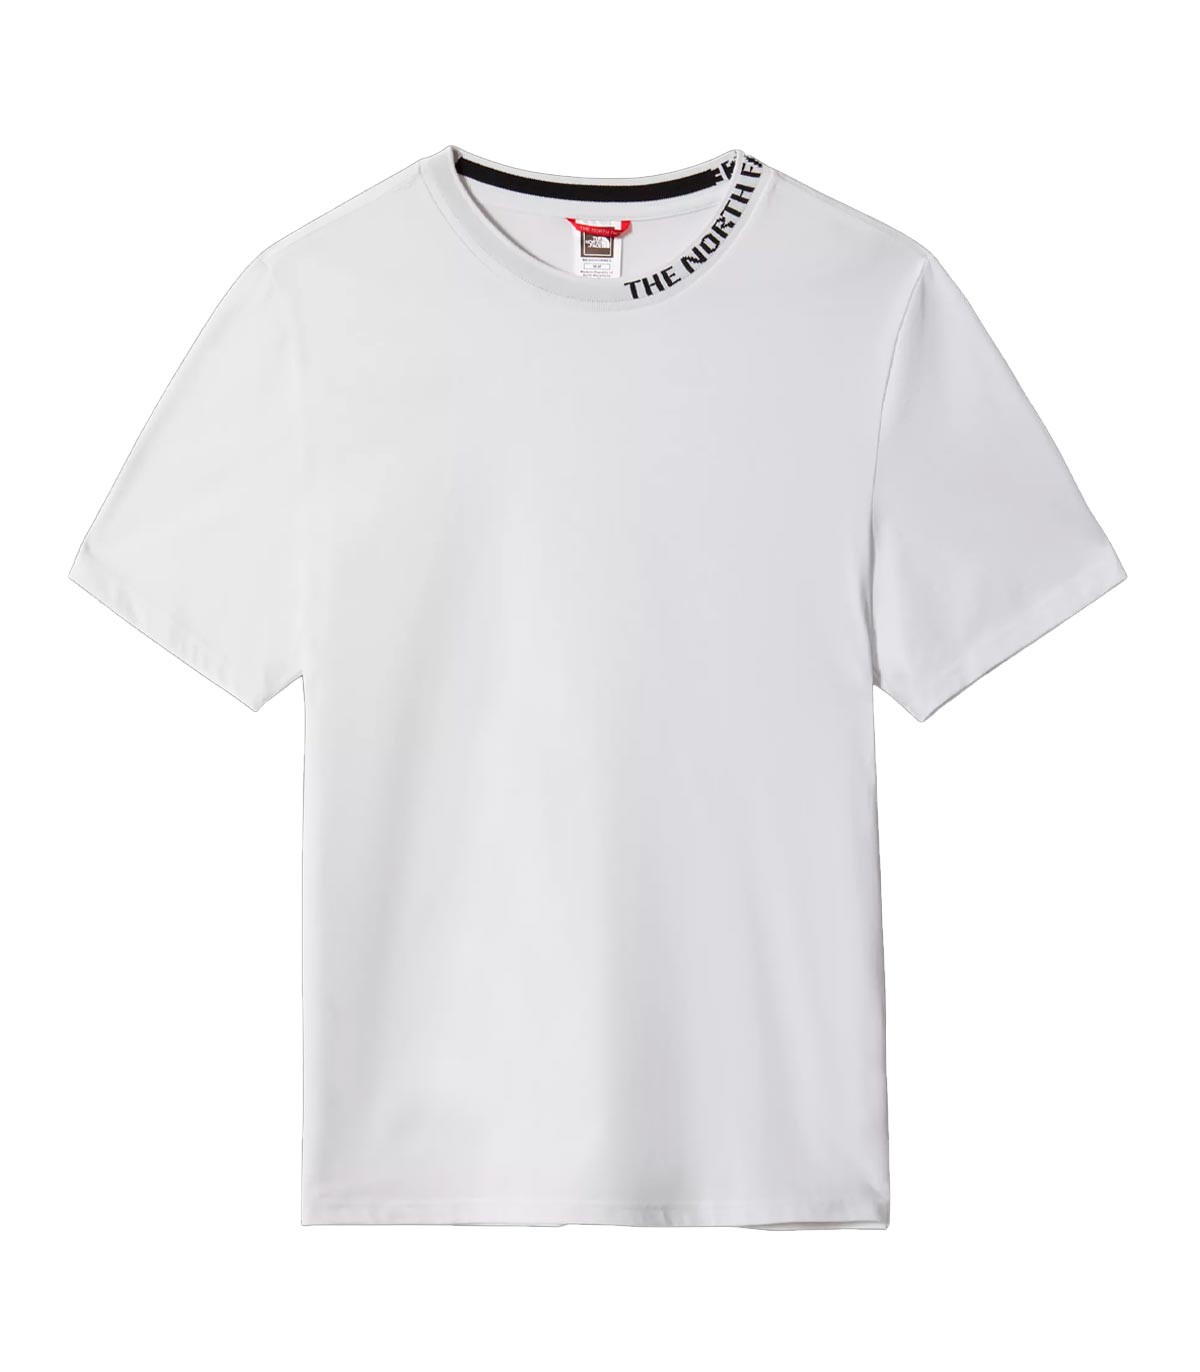 The North Face - Camiseta Zumu - Blanco